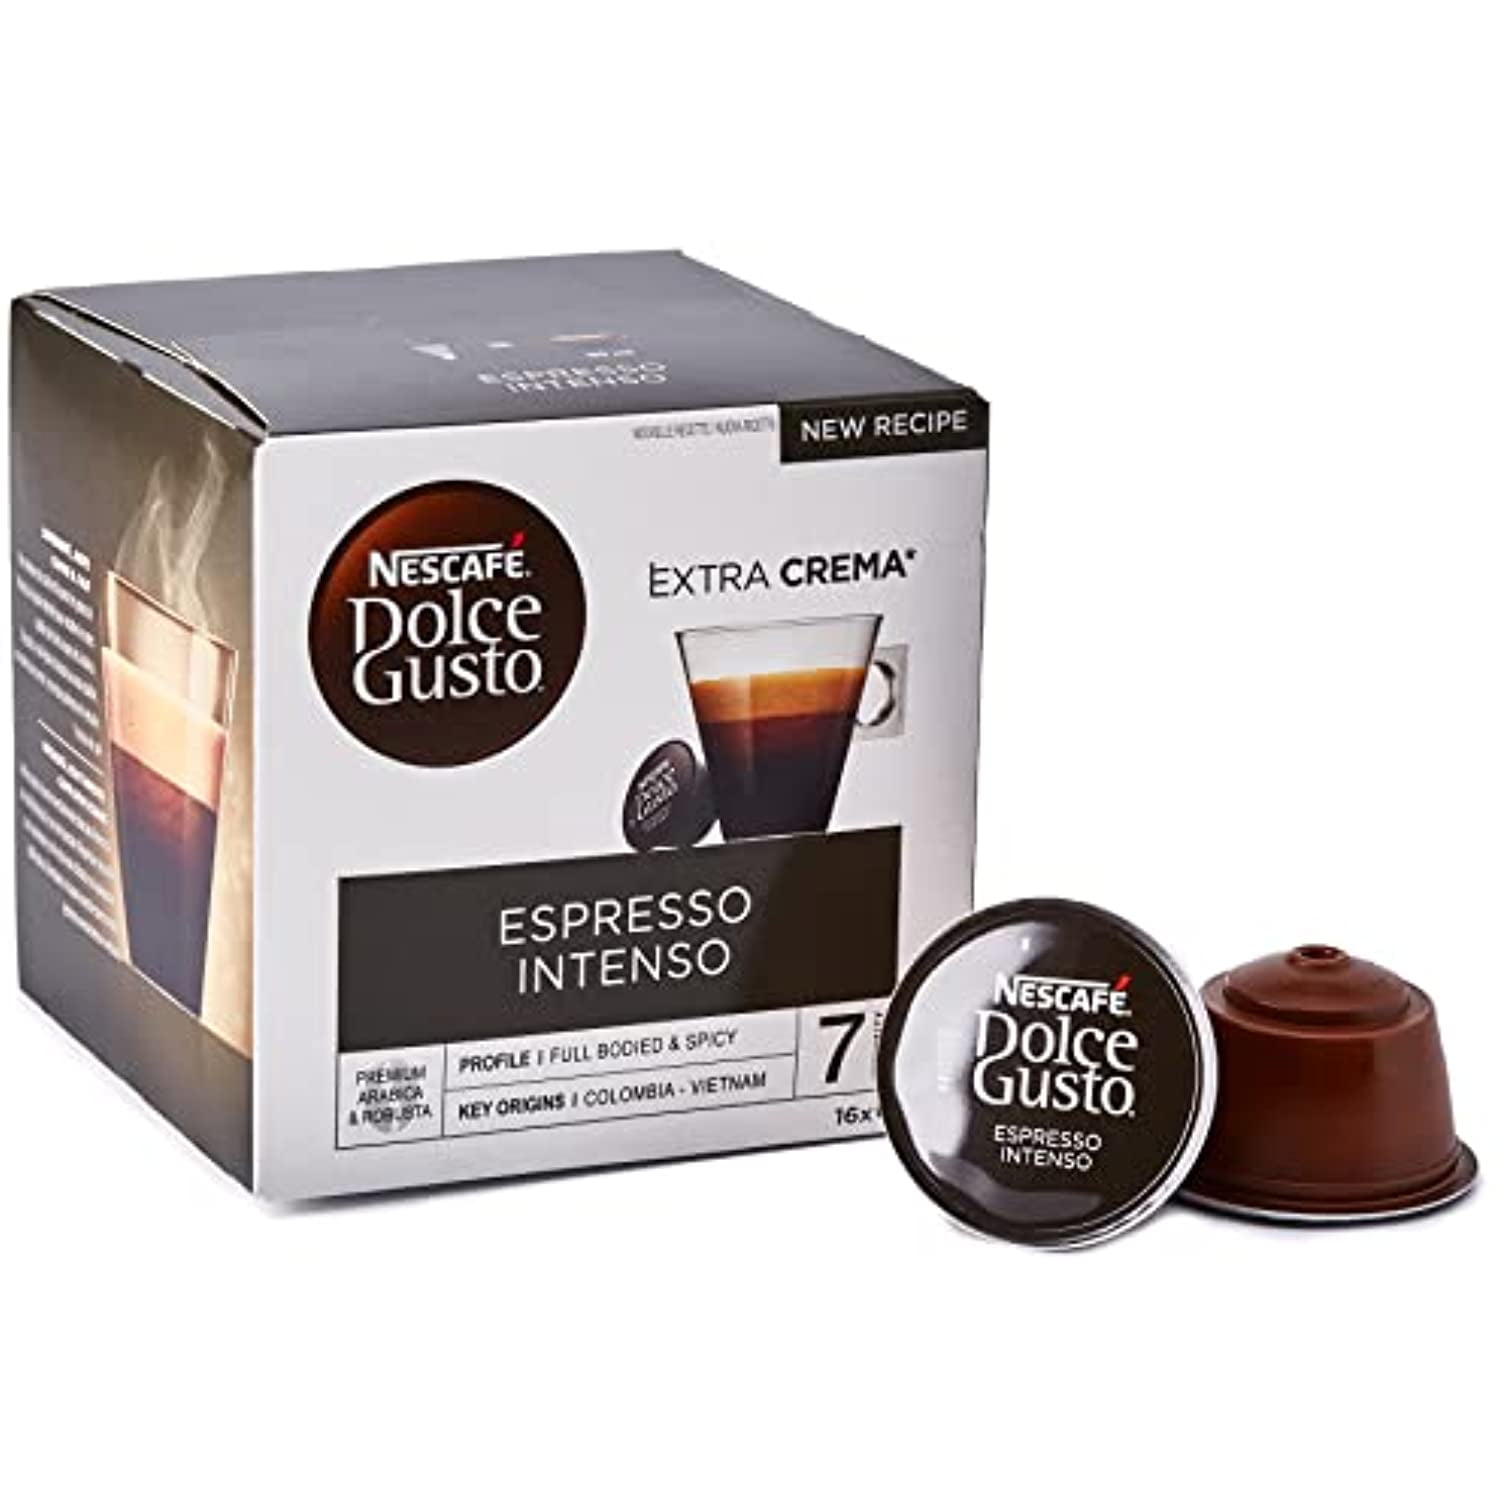 Nescafe Dolce Gusto Lungo Intenso Coffee capsule, 16 pcs.